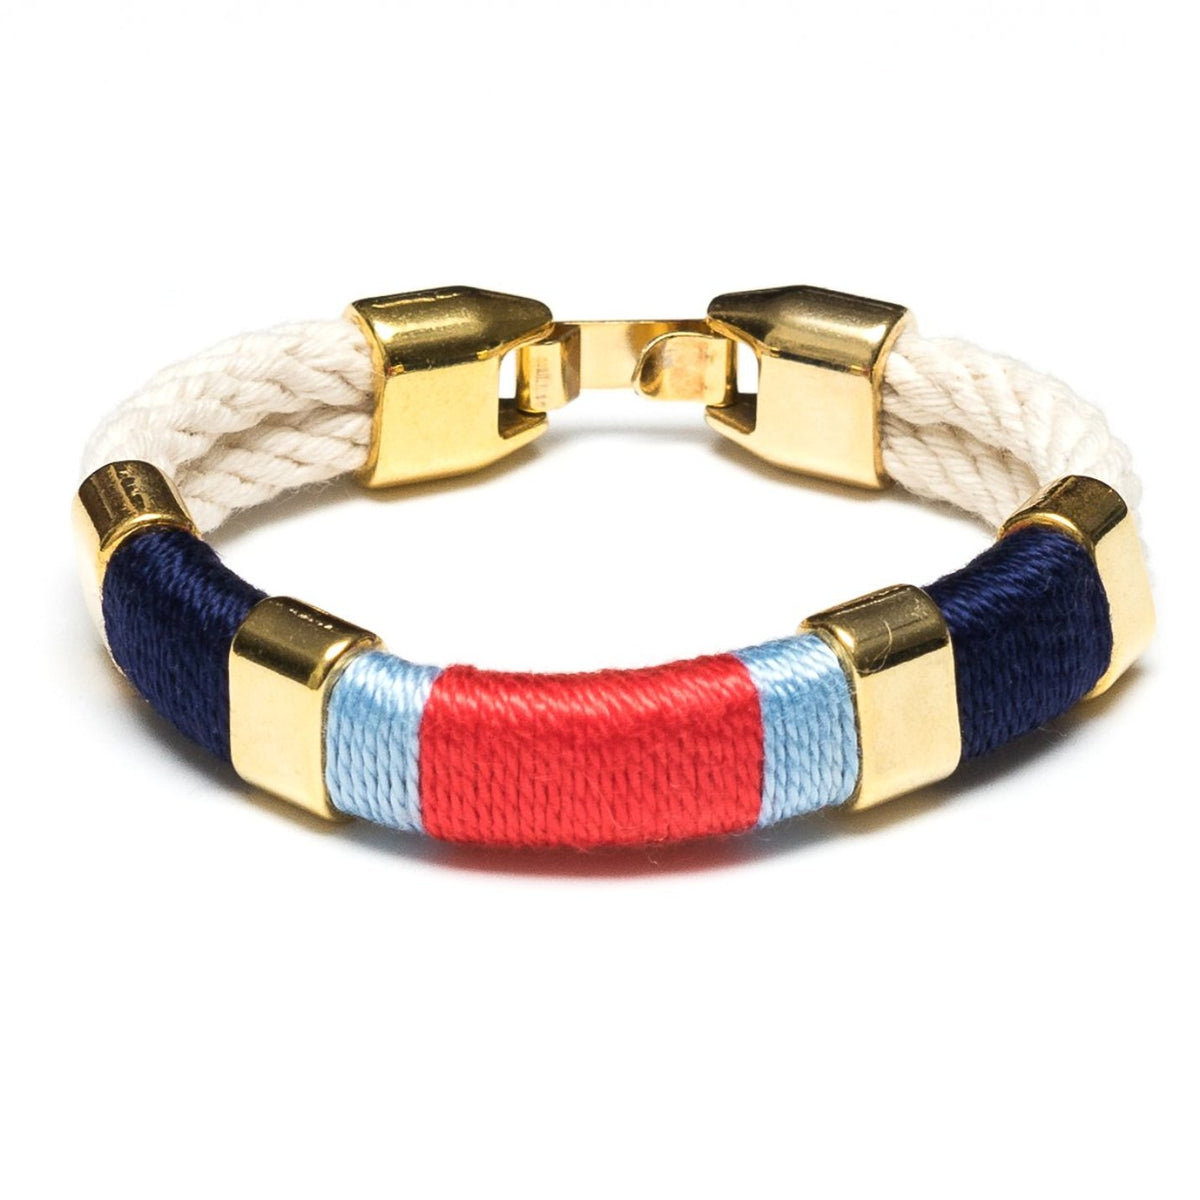 Allison Cole Jewelry - Newbury Bracelet - Ivory/ Navy/ Light Blue/ Coral/ Gold